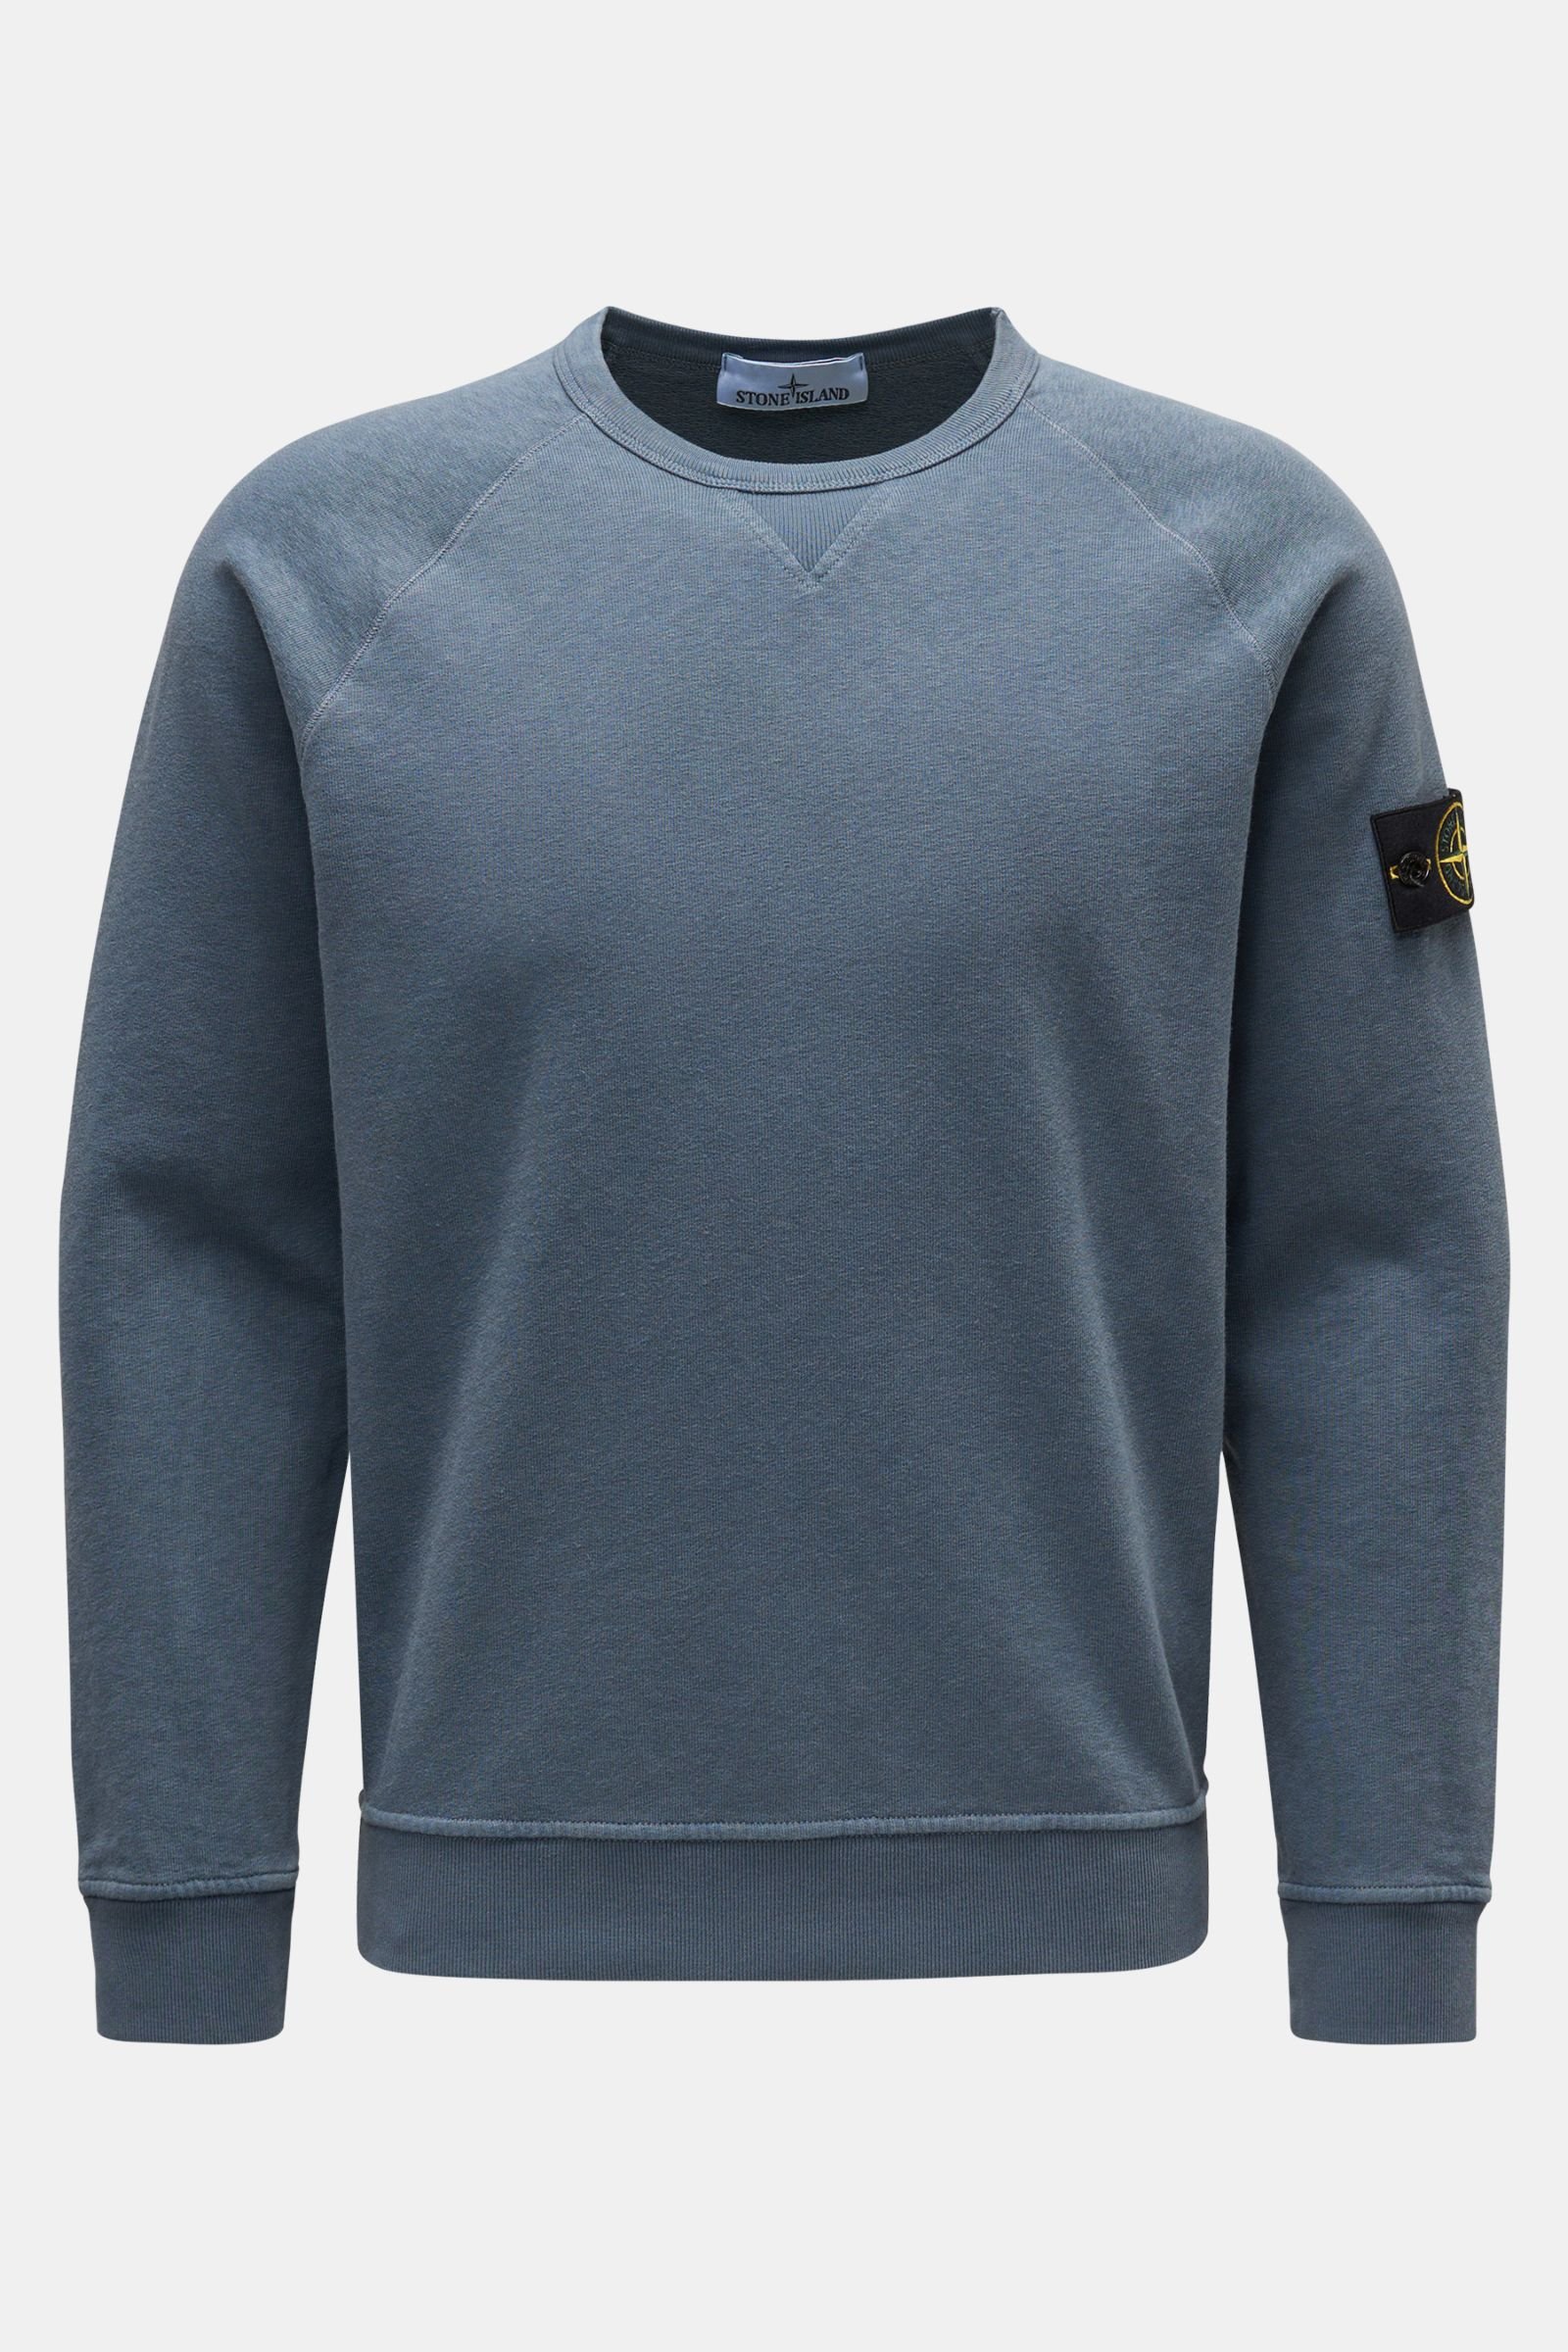 Crew neck sweatshirt grey-blue